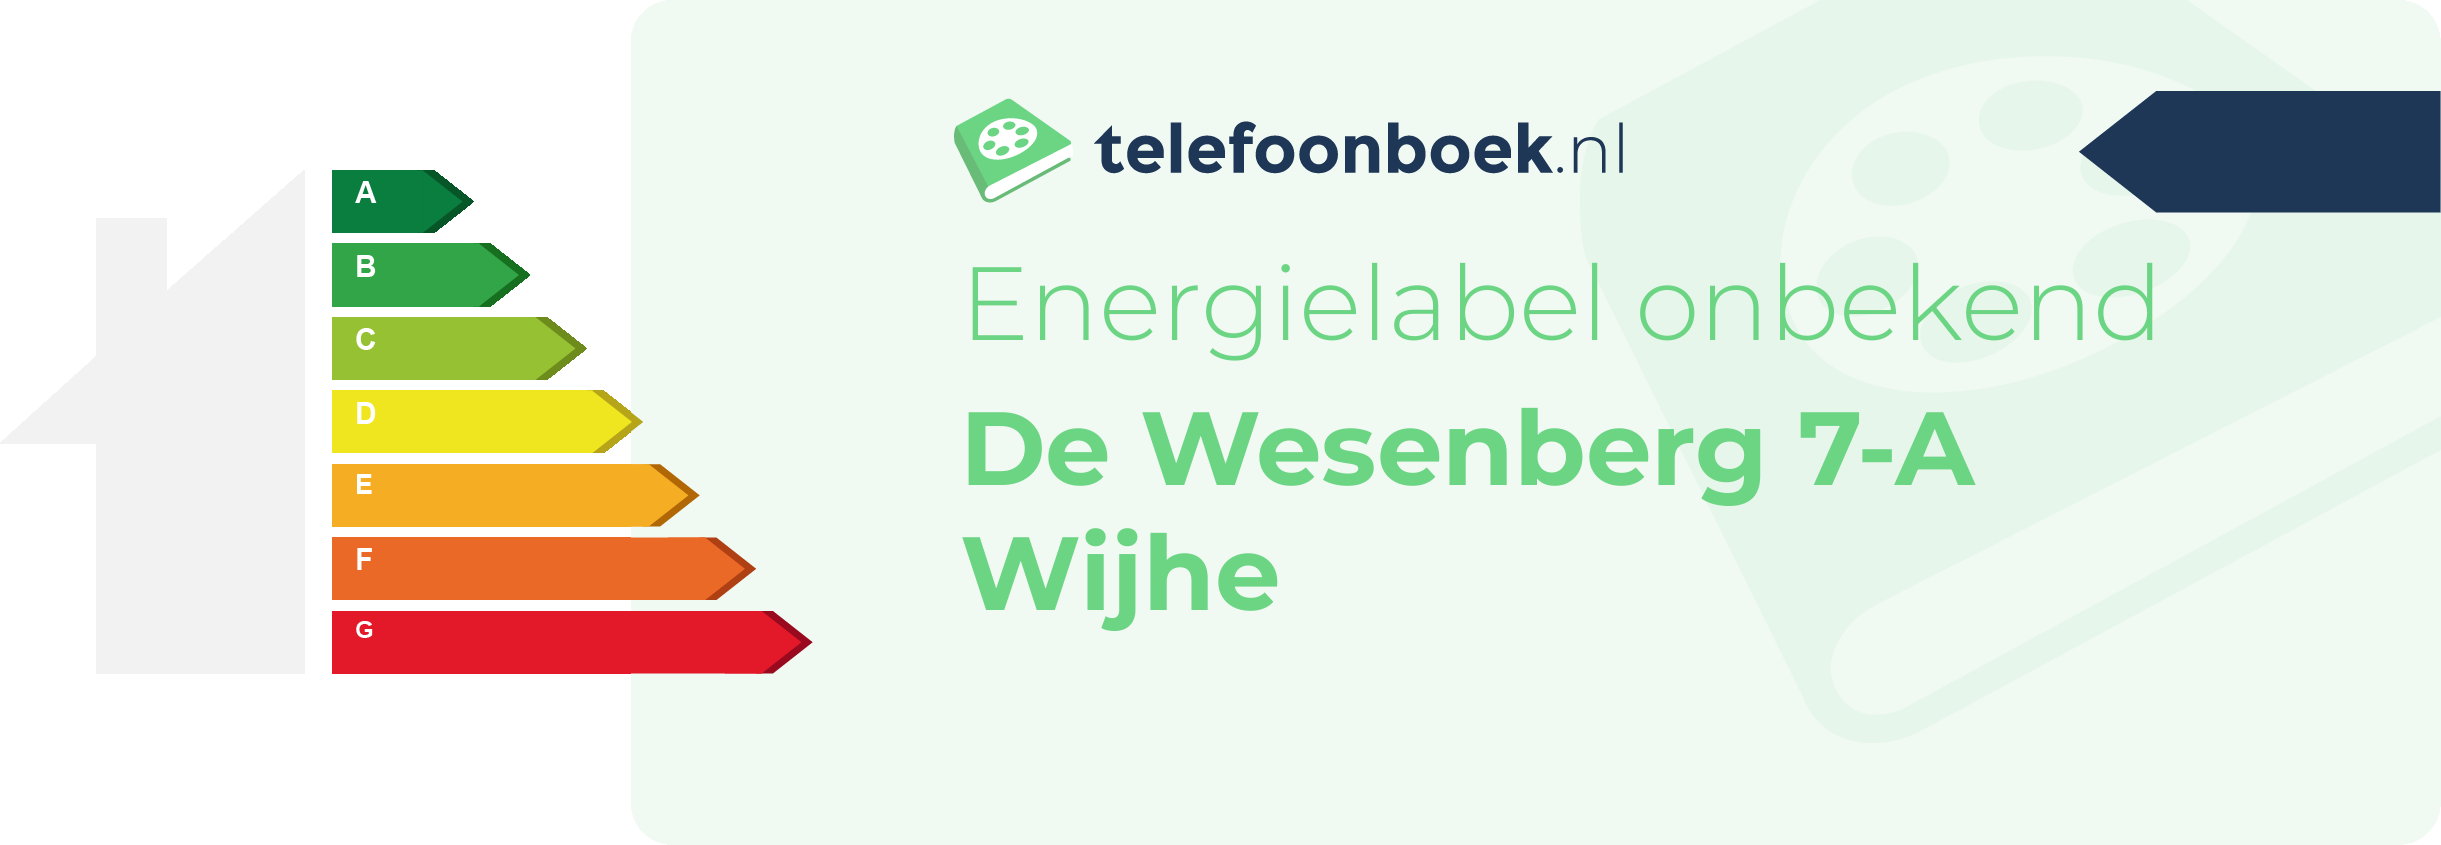 Energielabel De Wesenberg 7-A Wijhe